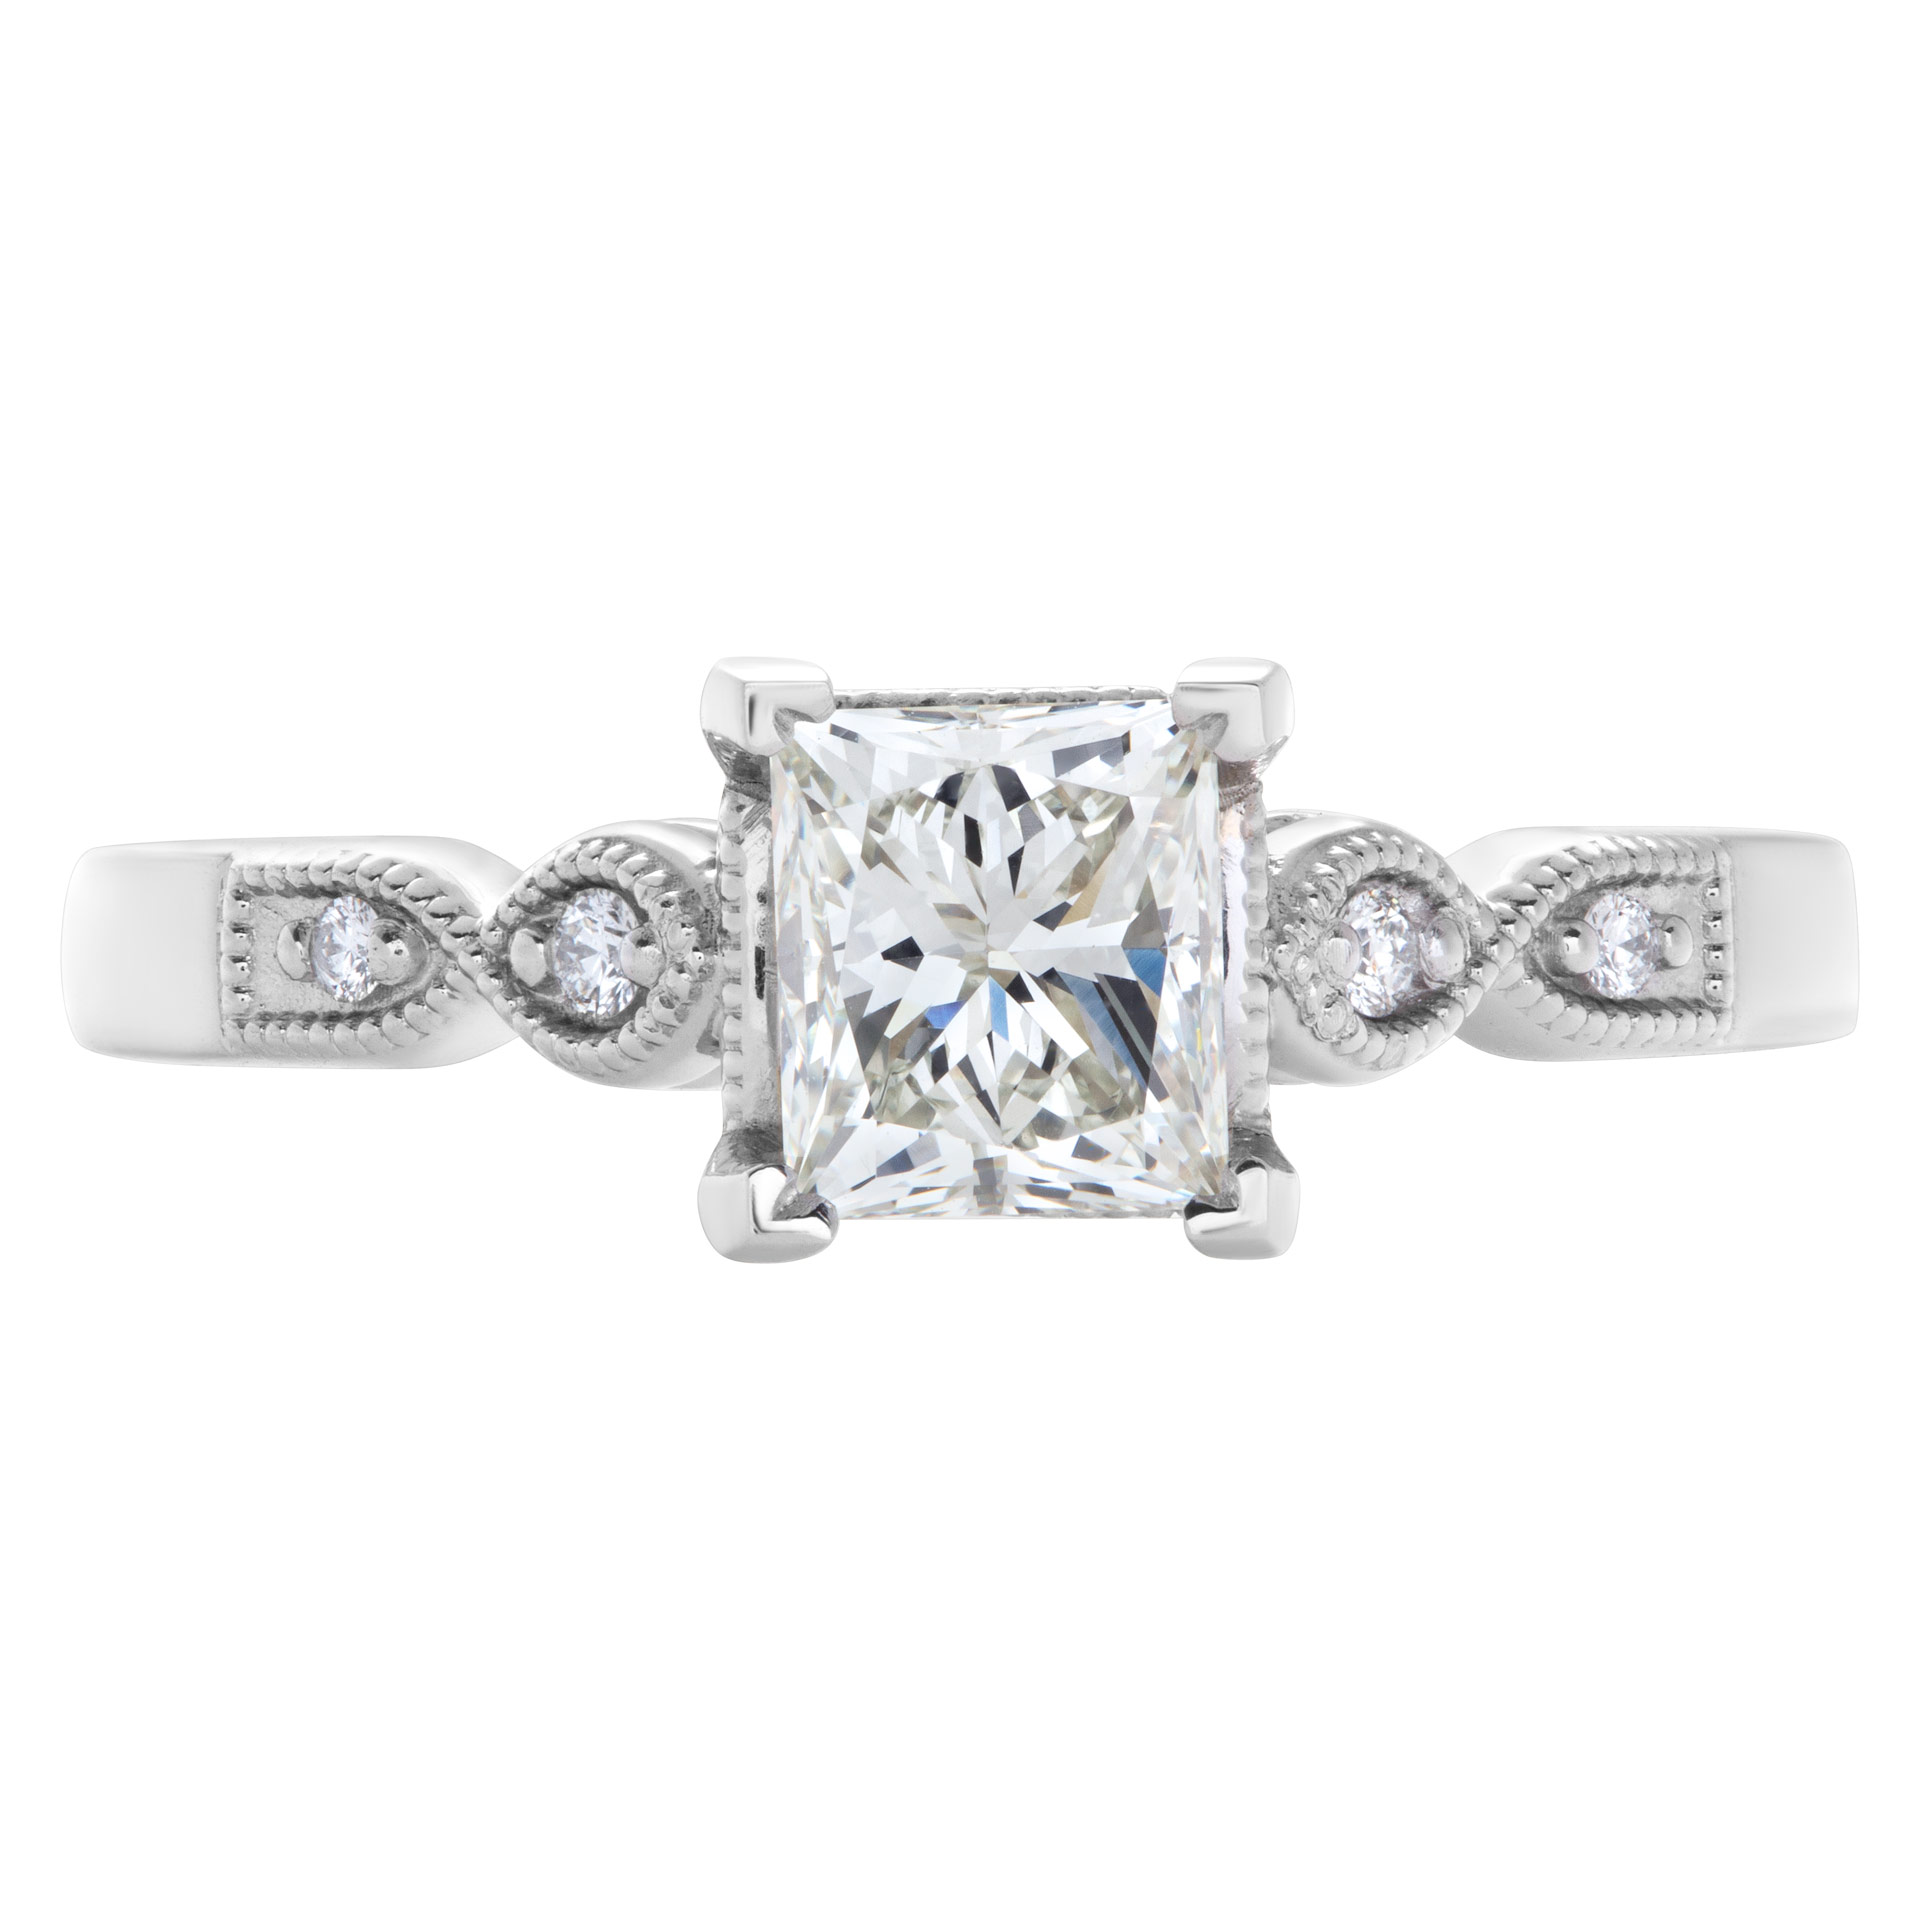 GIA certified rectangular modified brilliant cut diamond 1.03 carat (L color, VVS2 clarity) ring image 2